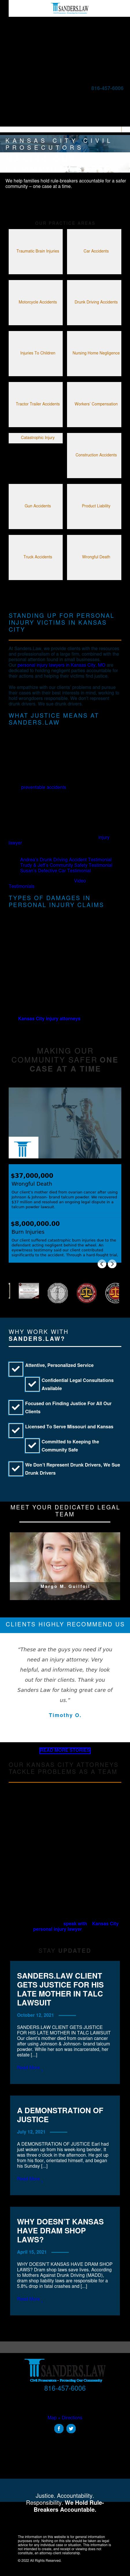 Sanders.Law - Kansas City MO Lawyers